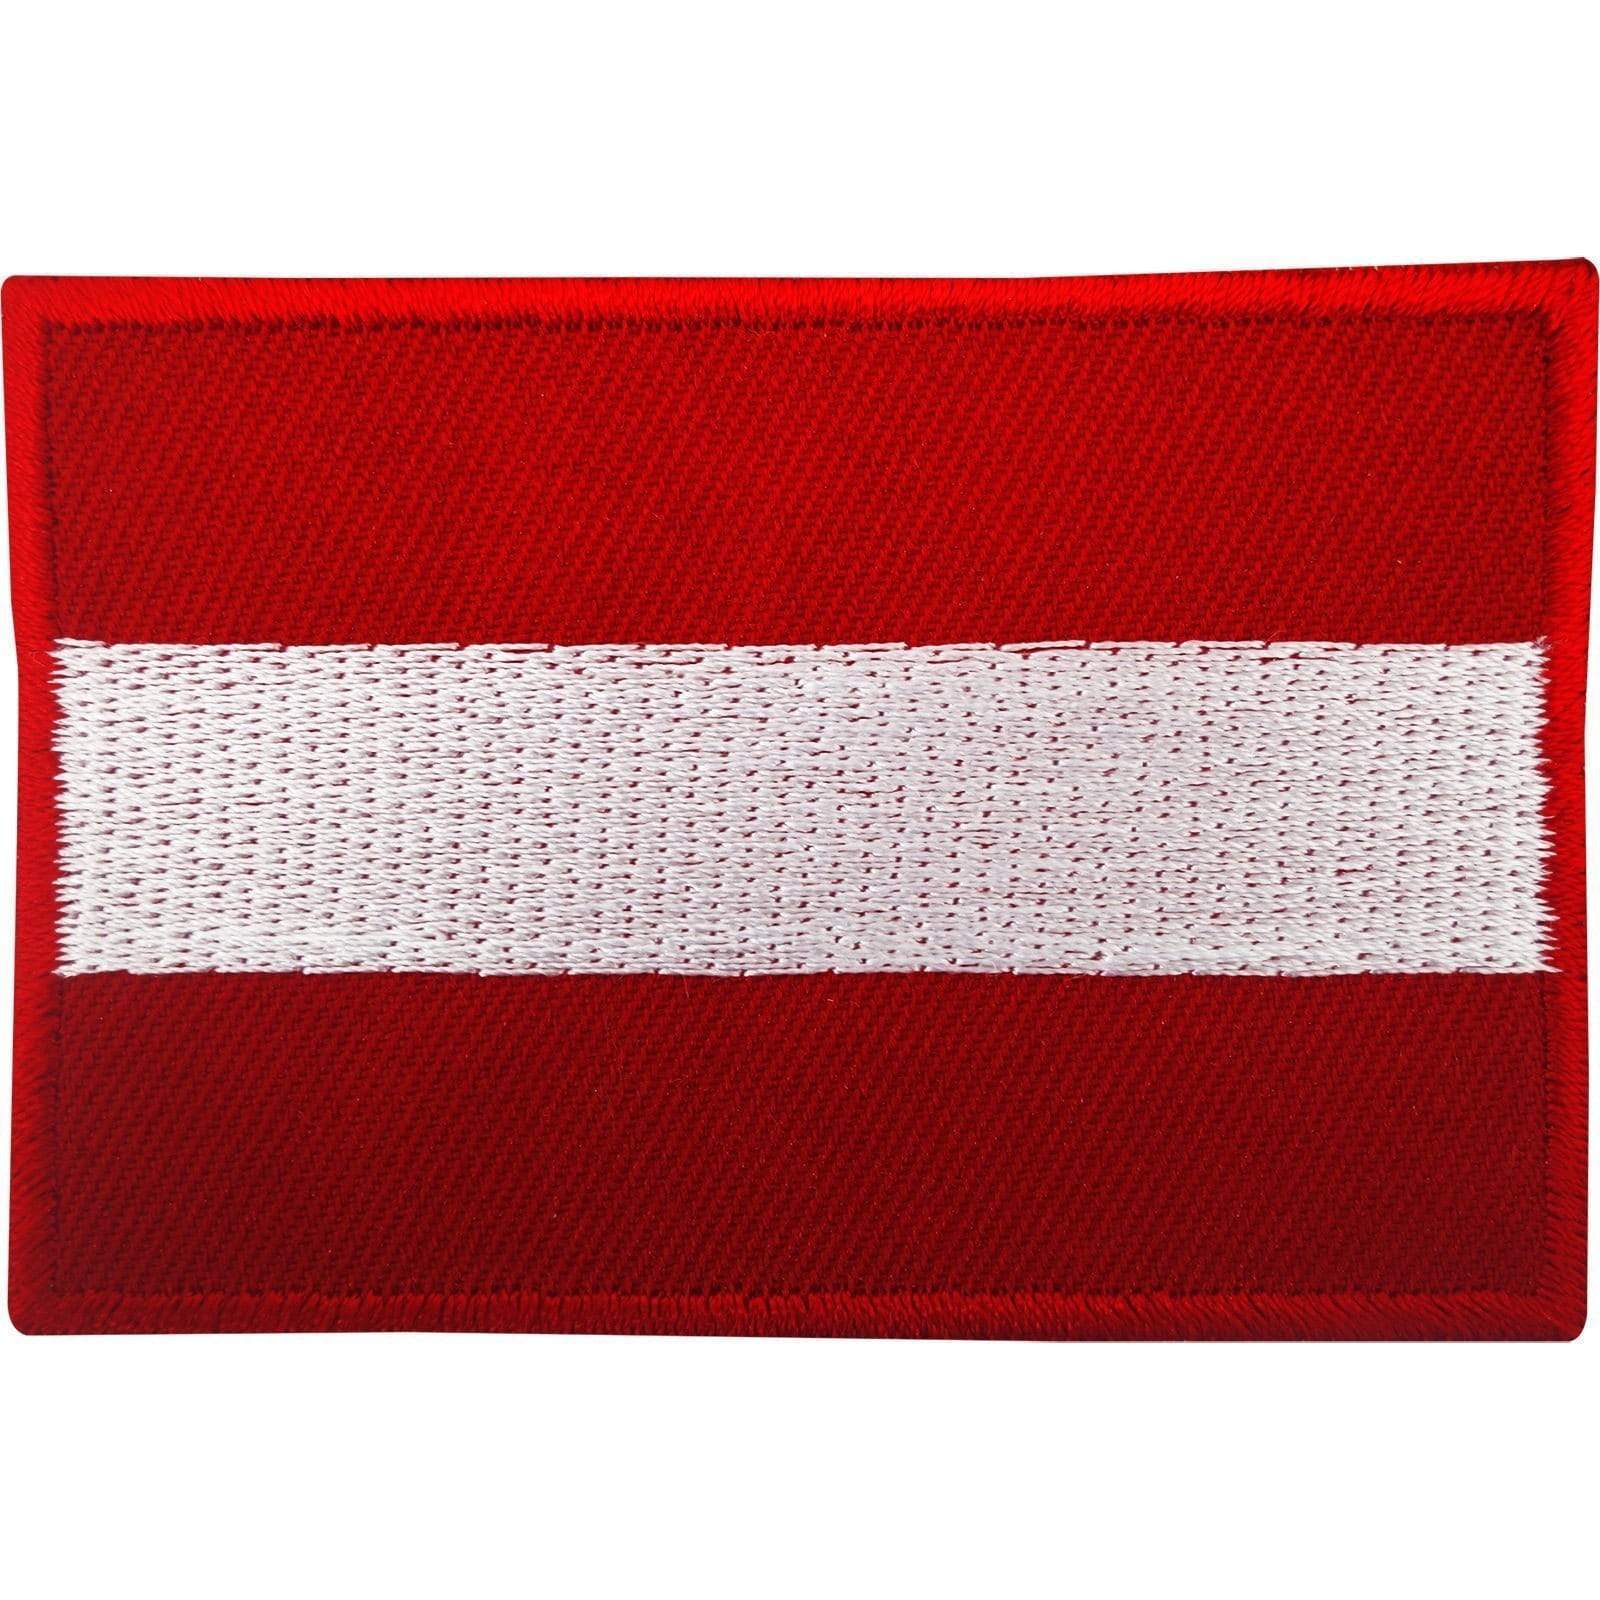 Austria Flag Patch Iron On Badge Sew On Austrian Flag Embroidered Applique Motif